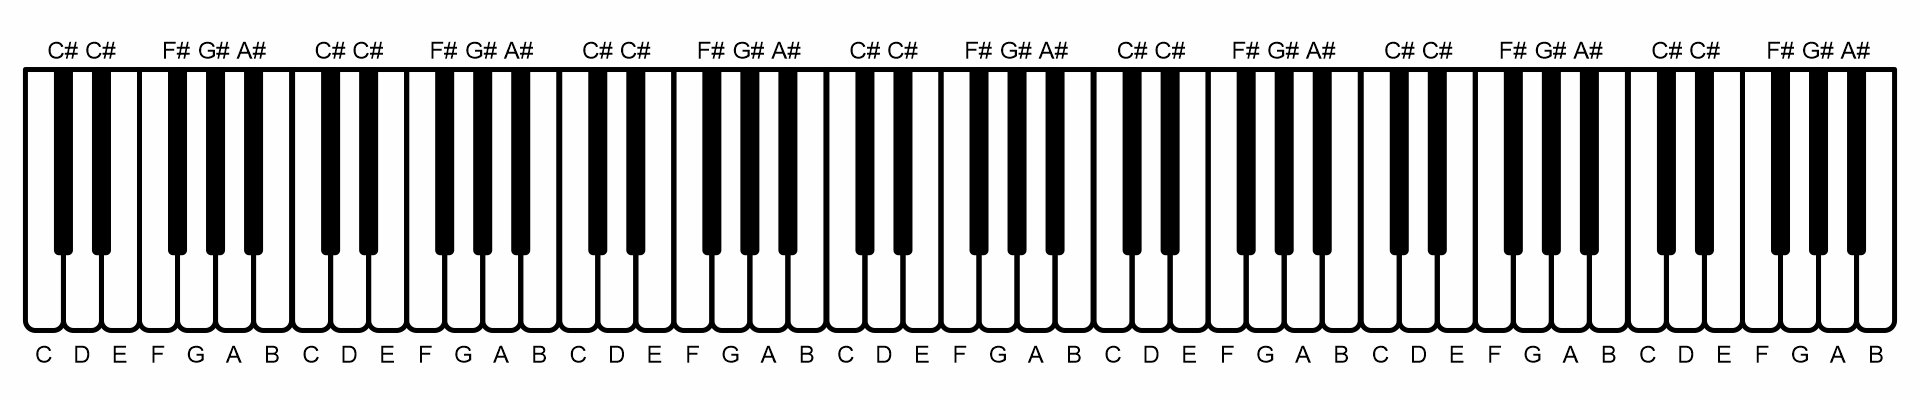 Piano Keyboard Template Image